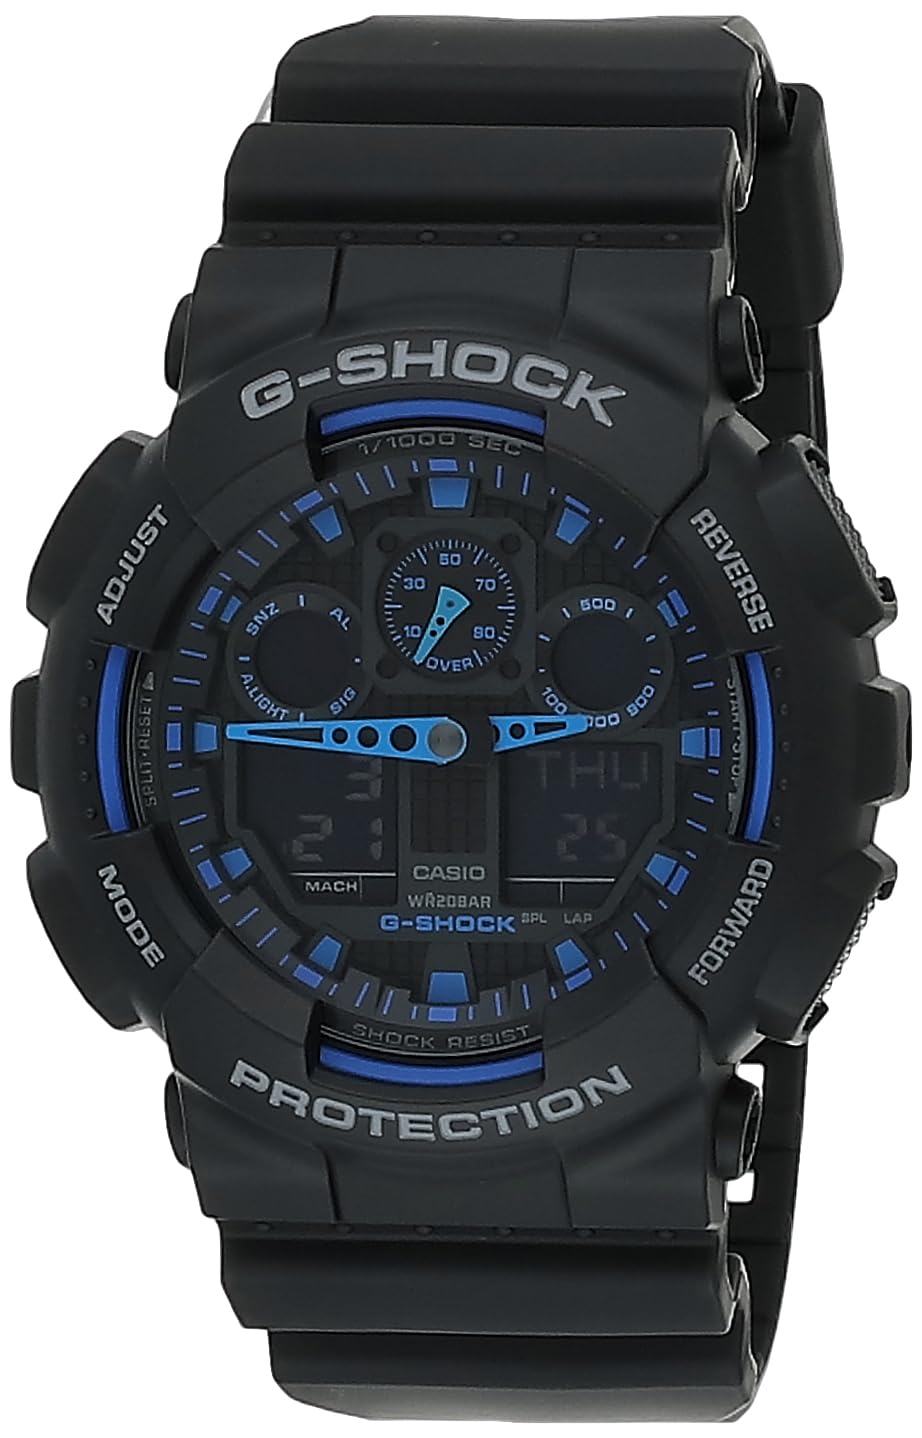 Casio G-Shock GA100-1A2 Ana-Digi Speed Indicator Black Dial Men's Watch